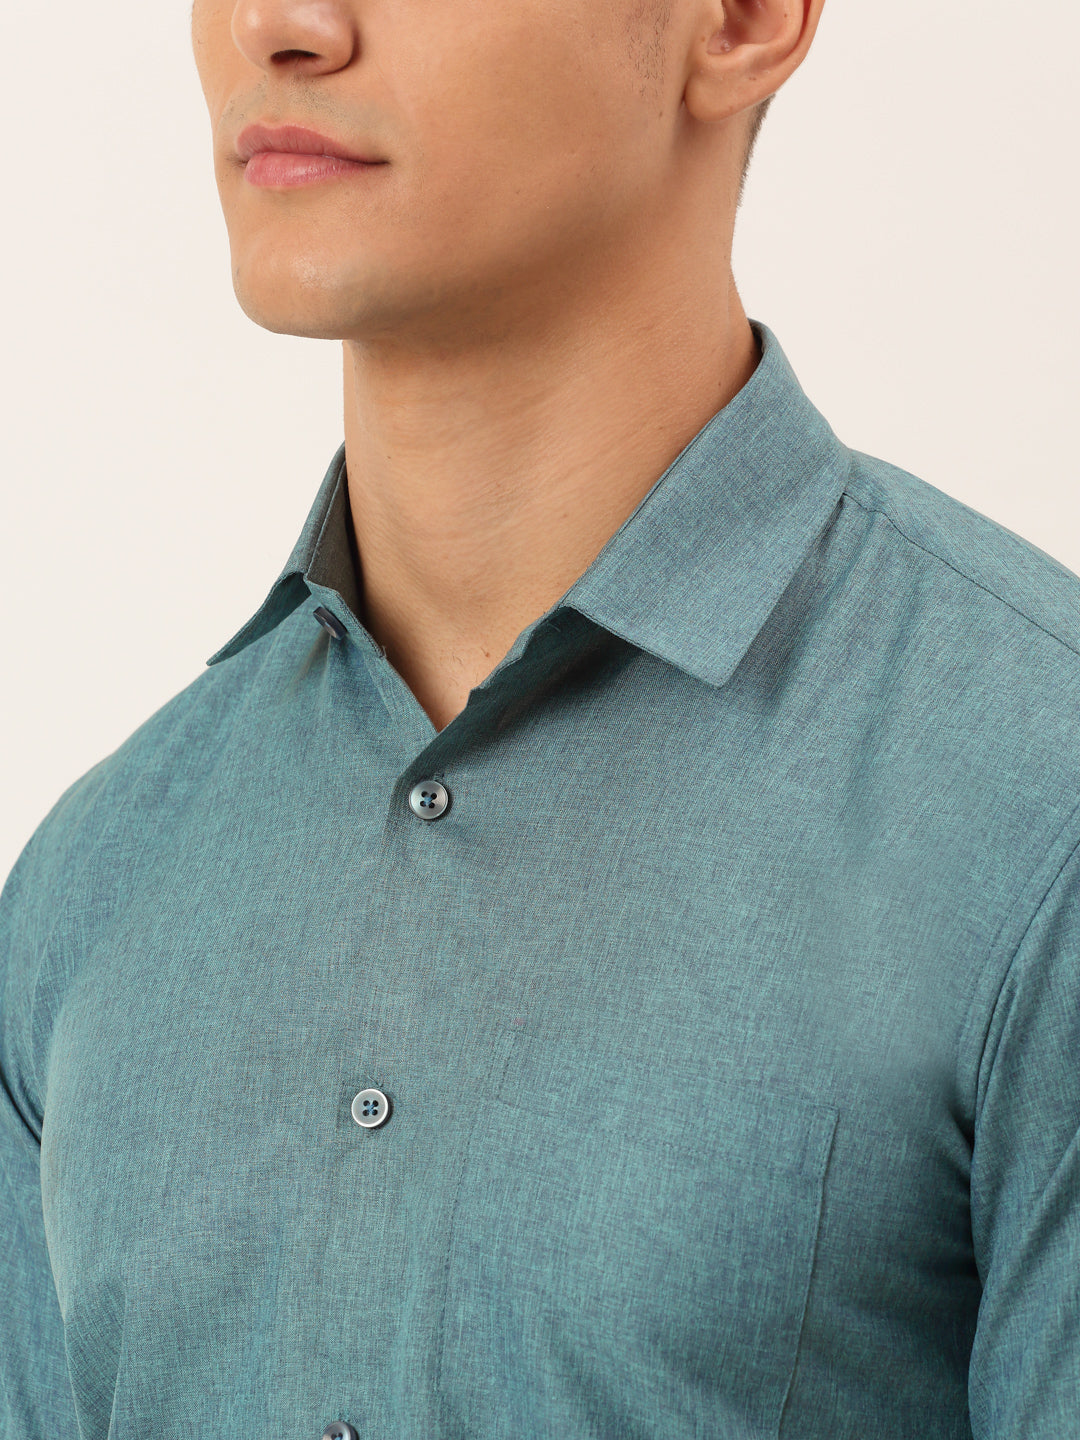 Men's Cotton Solid Half Sleeve Formal Shirts ( SF 811Grey ) - Jainish